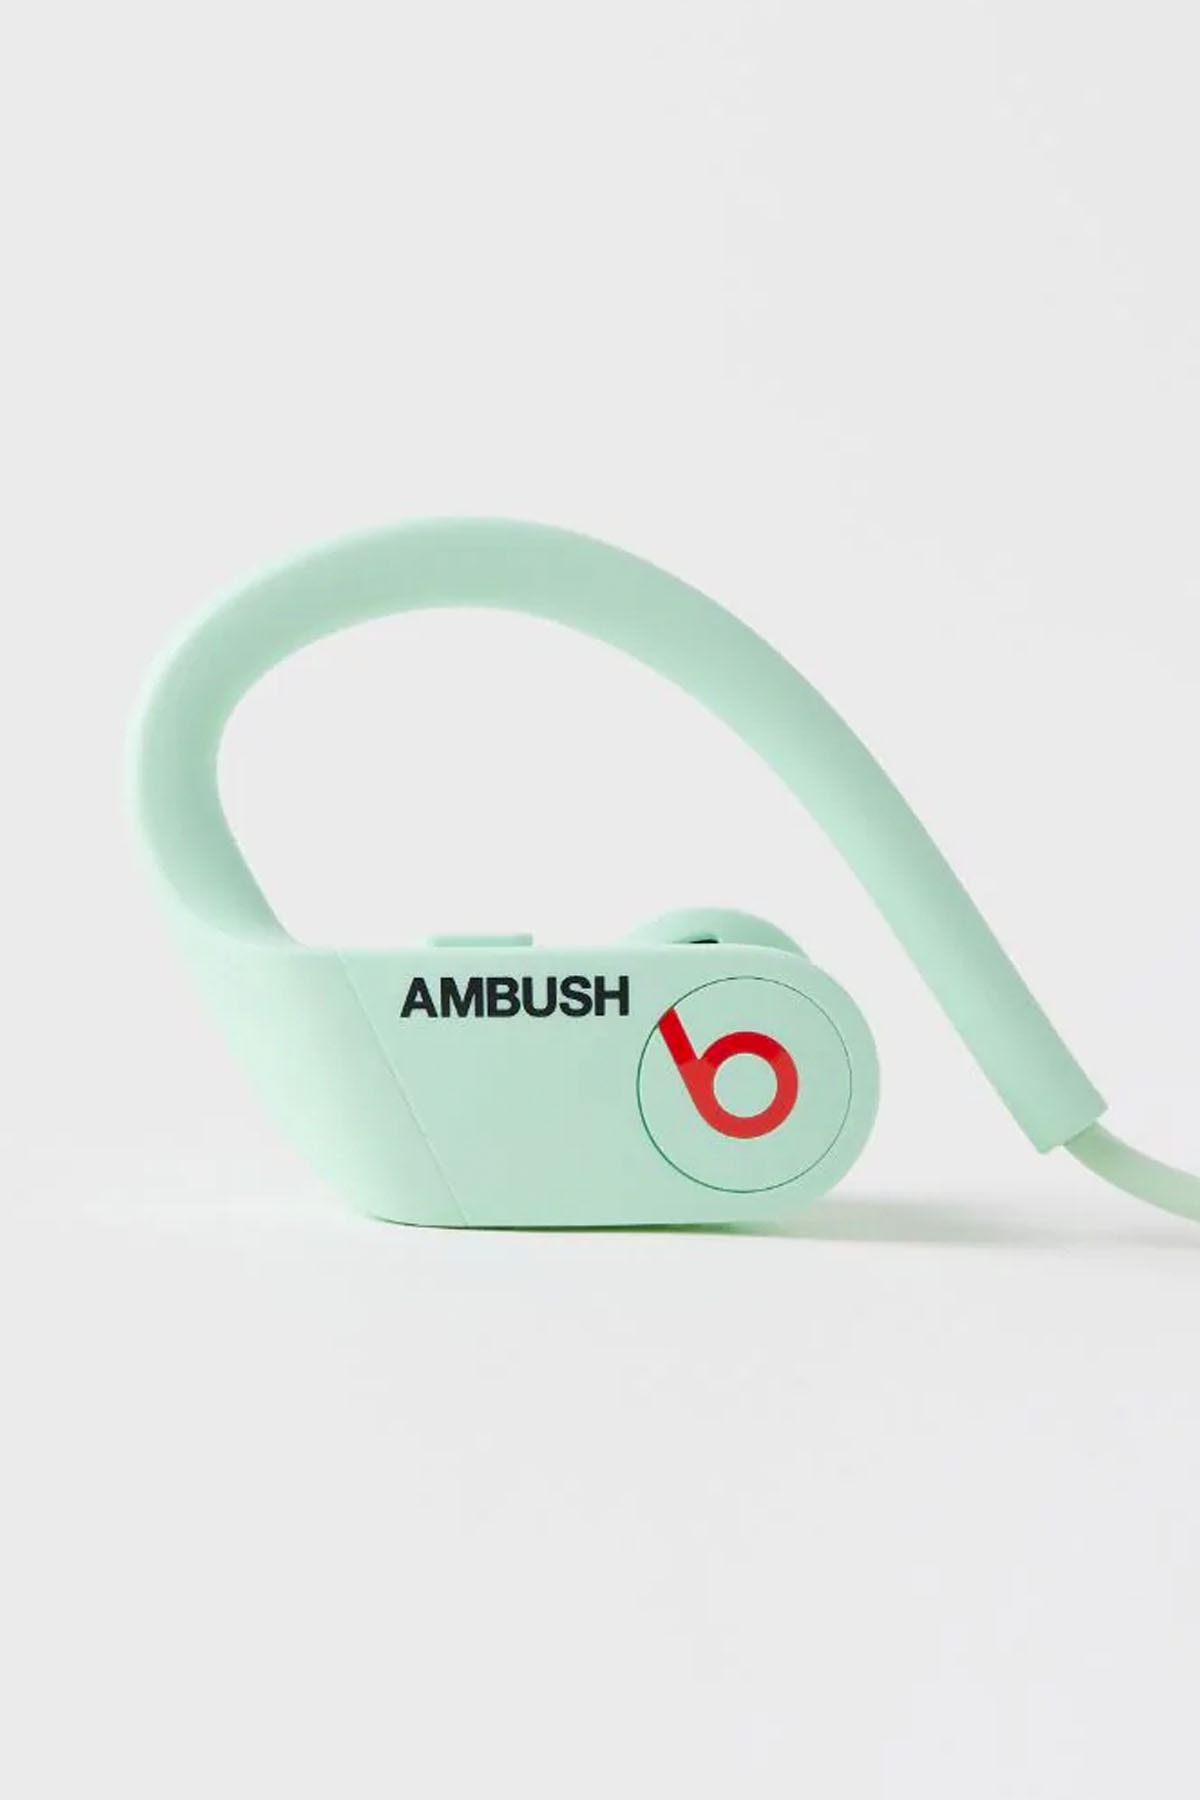 AMBUSH x Beats Powerbeats 全新聯乘無限耳機正式發佈